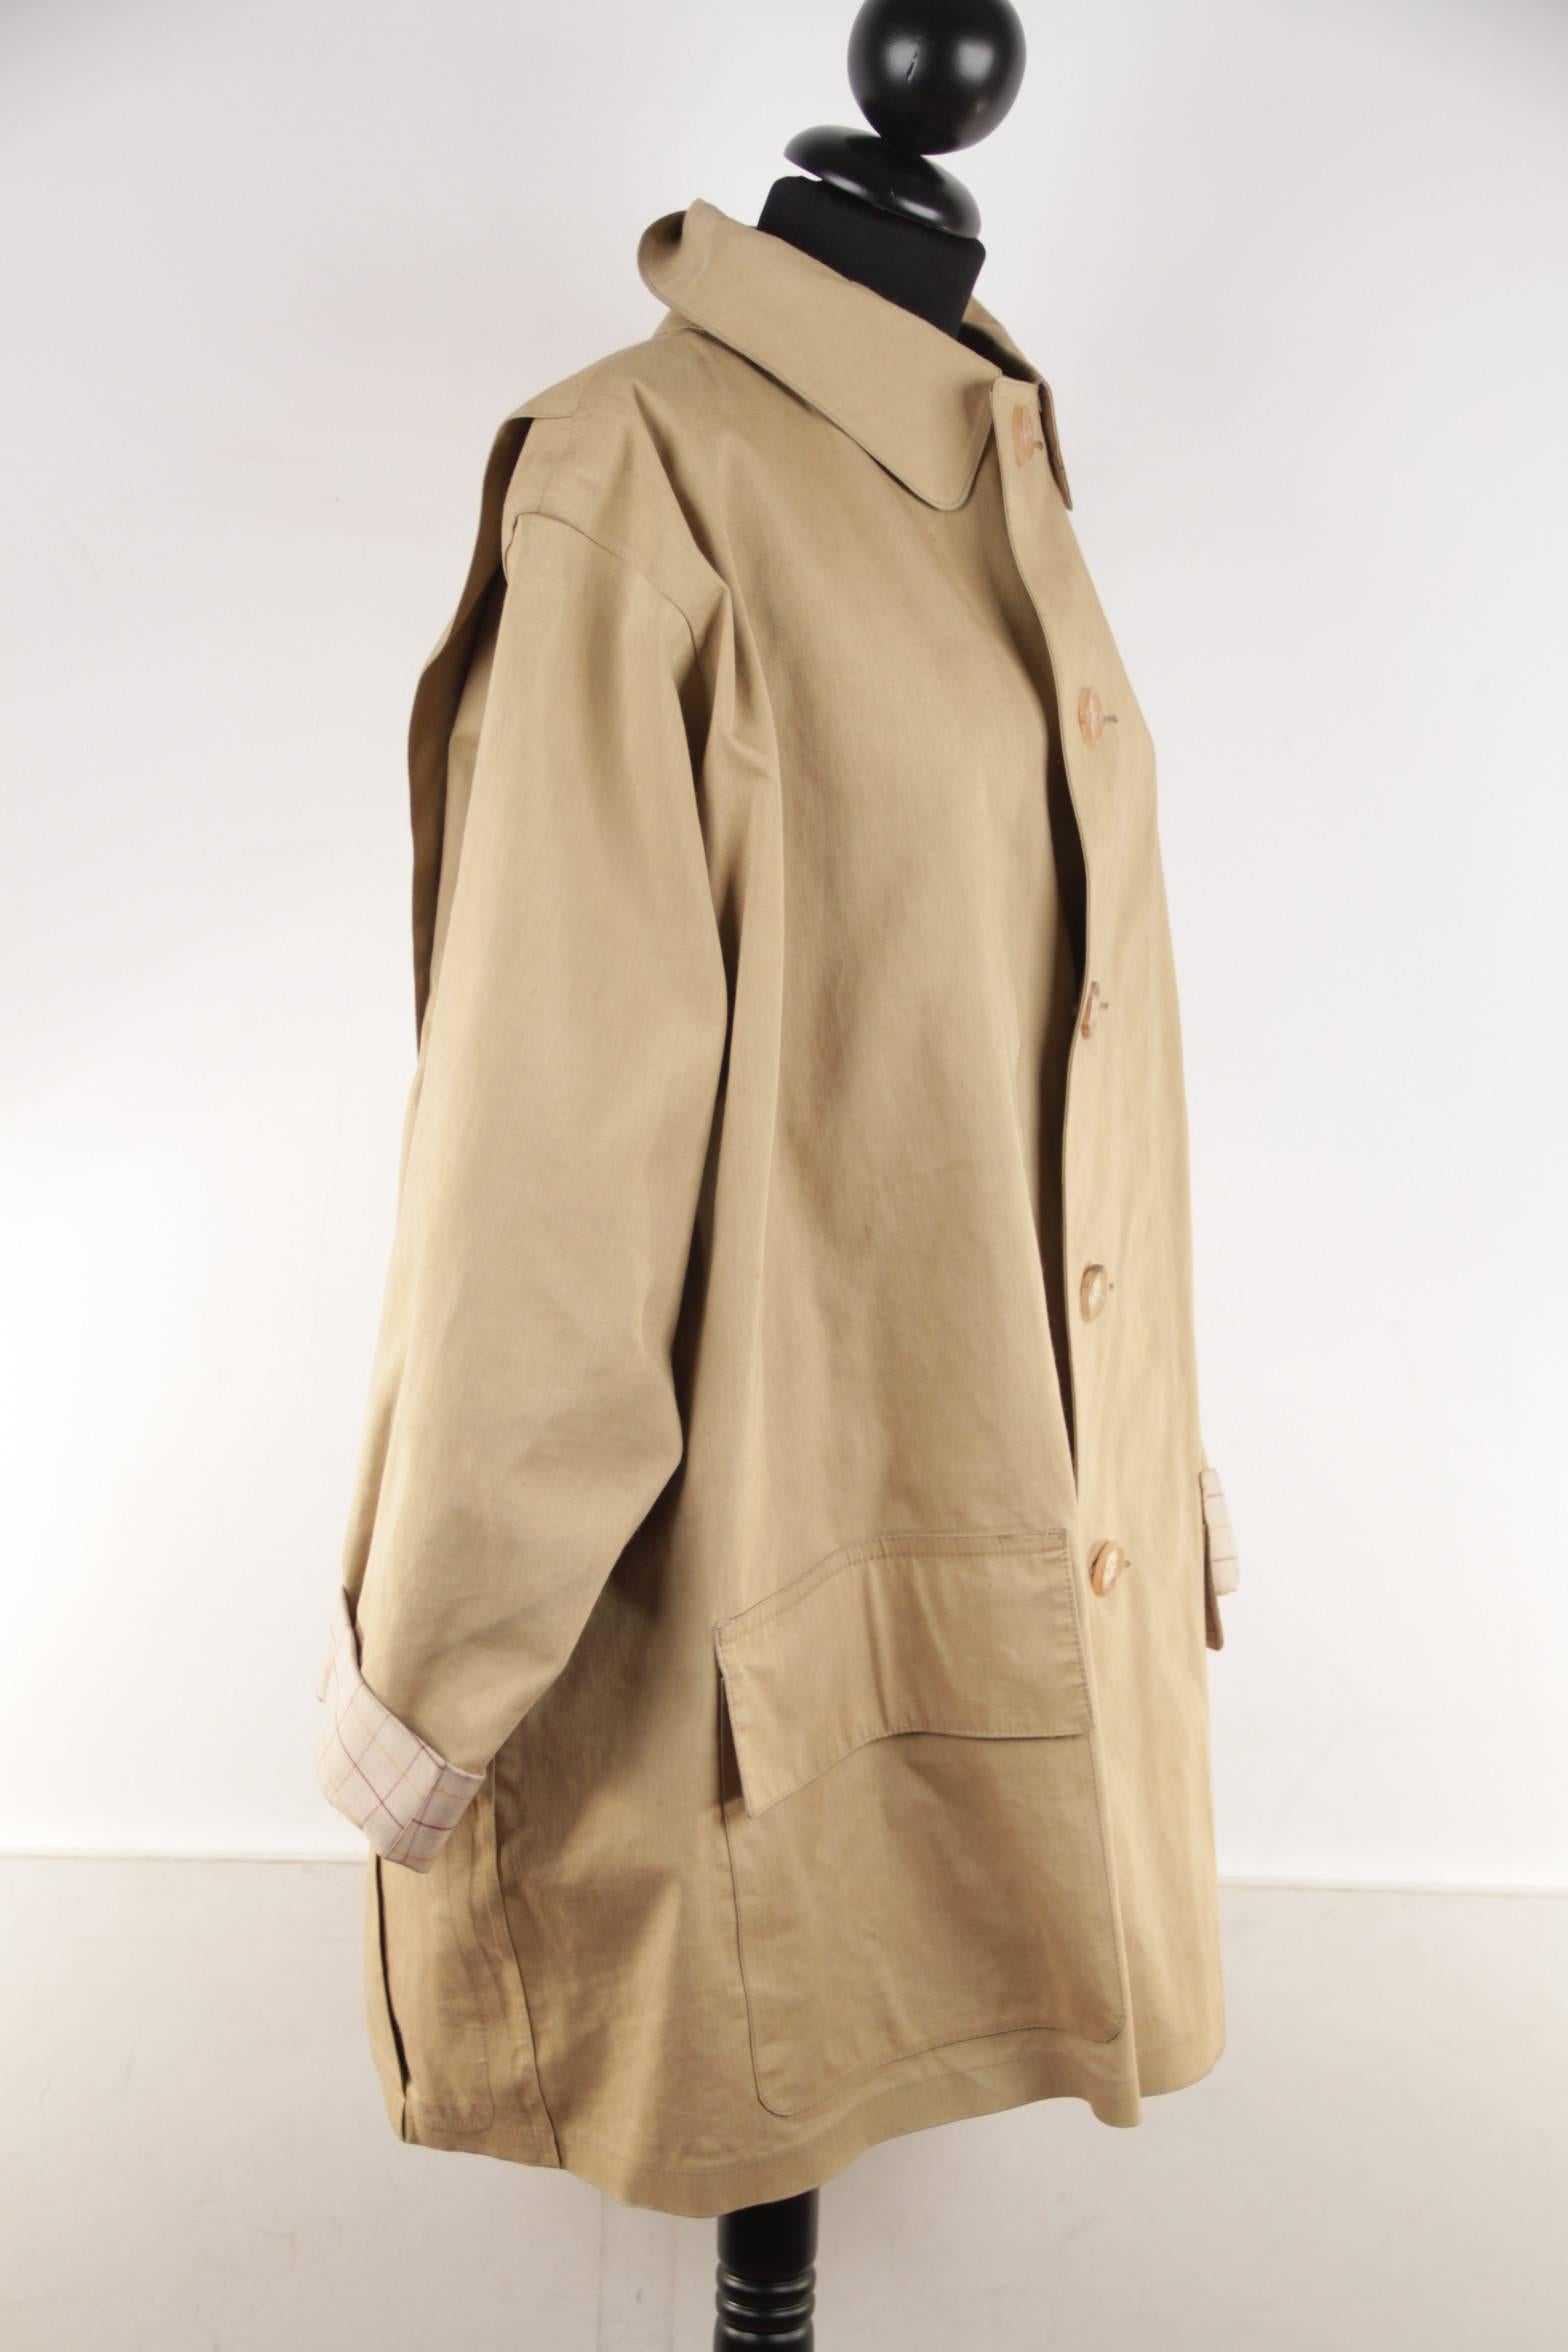 christonette top coat